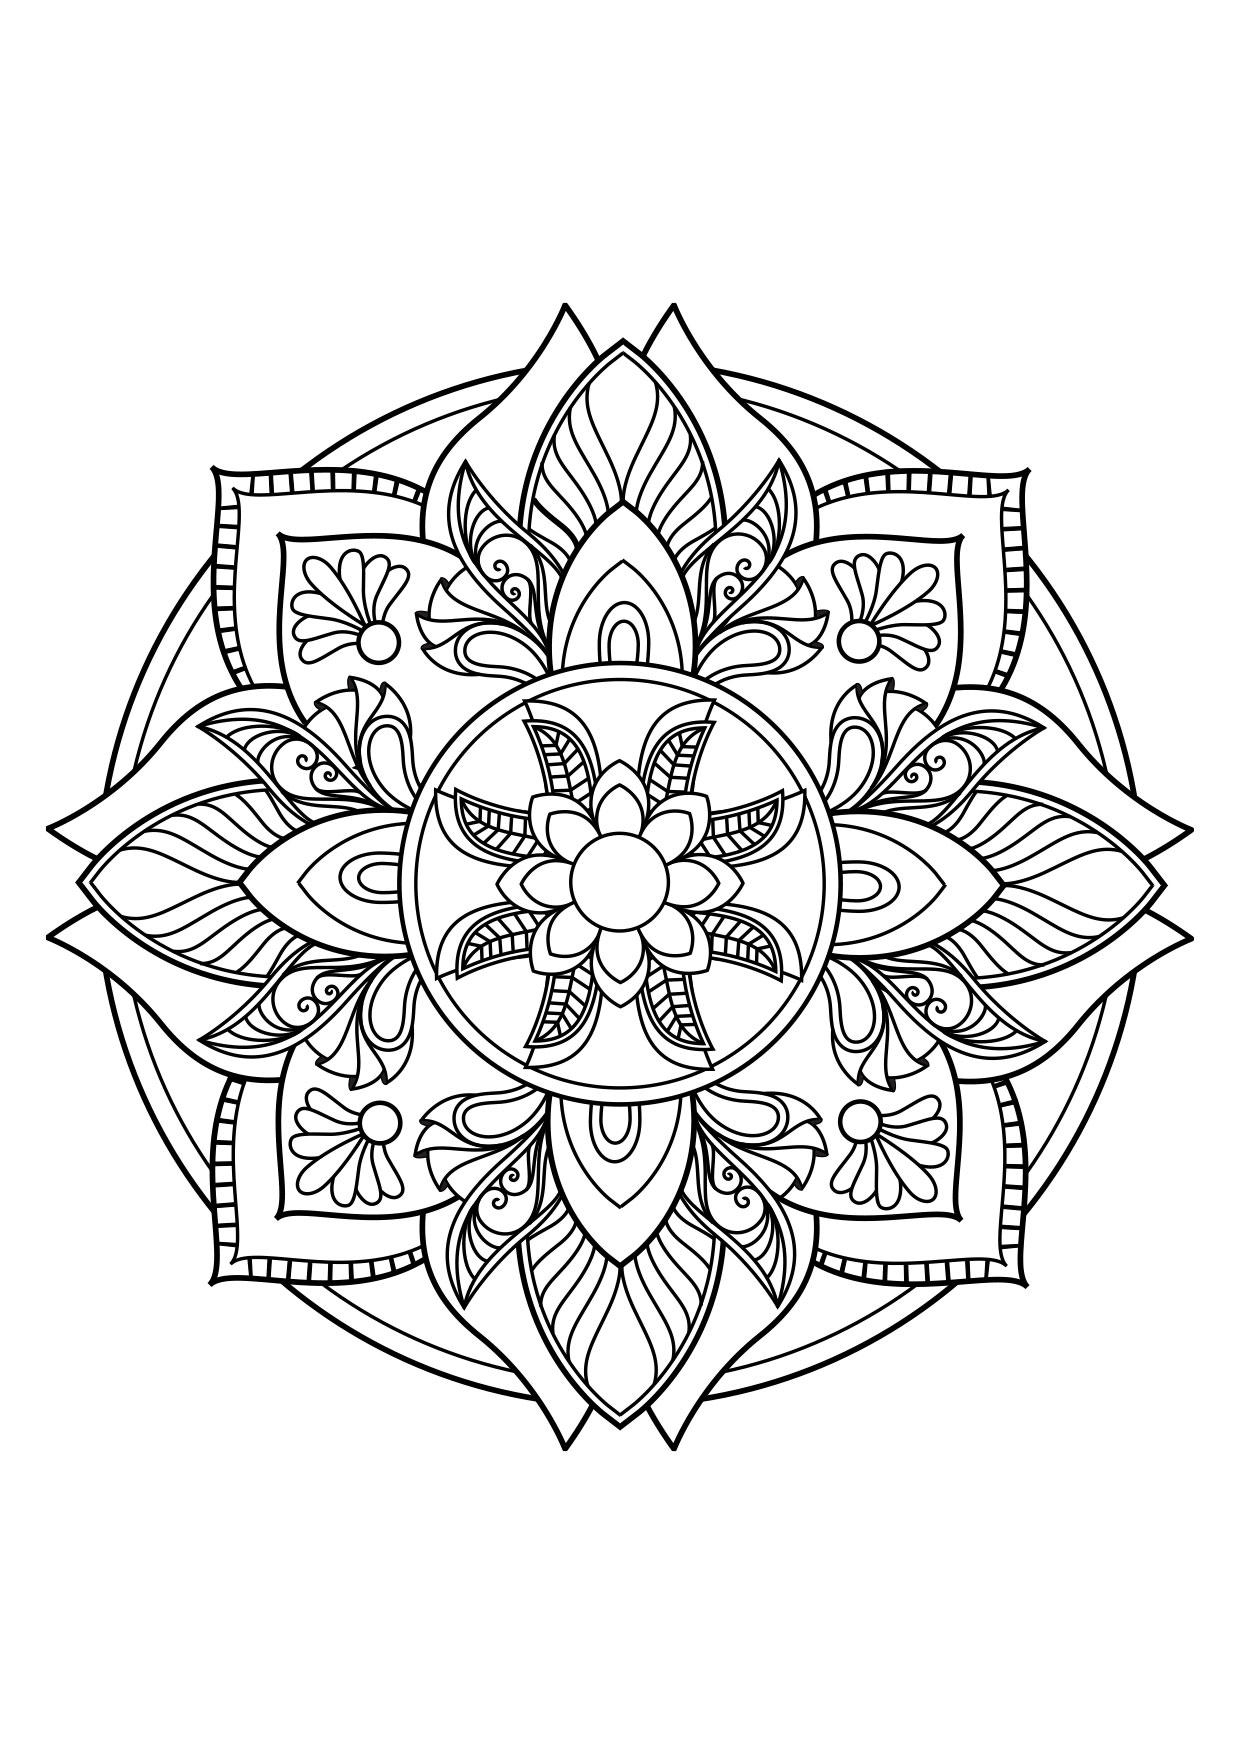 Coloriage Mandala - Coloriages Gratuits À Imprimer - Dessin 30830 serapportantà Coloriage Mandala 